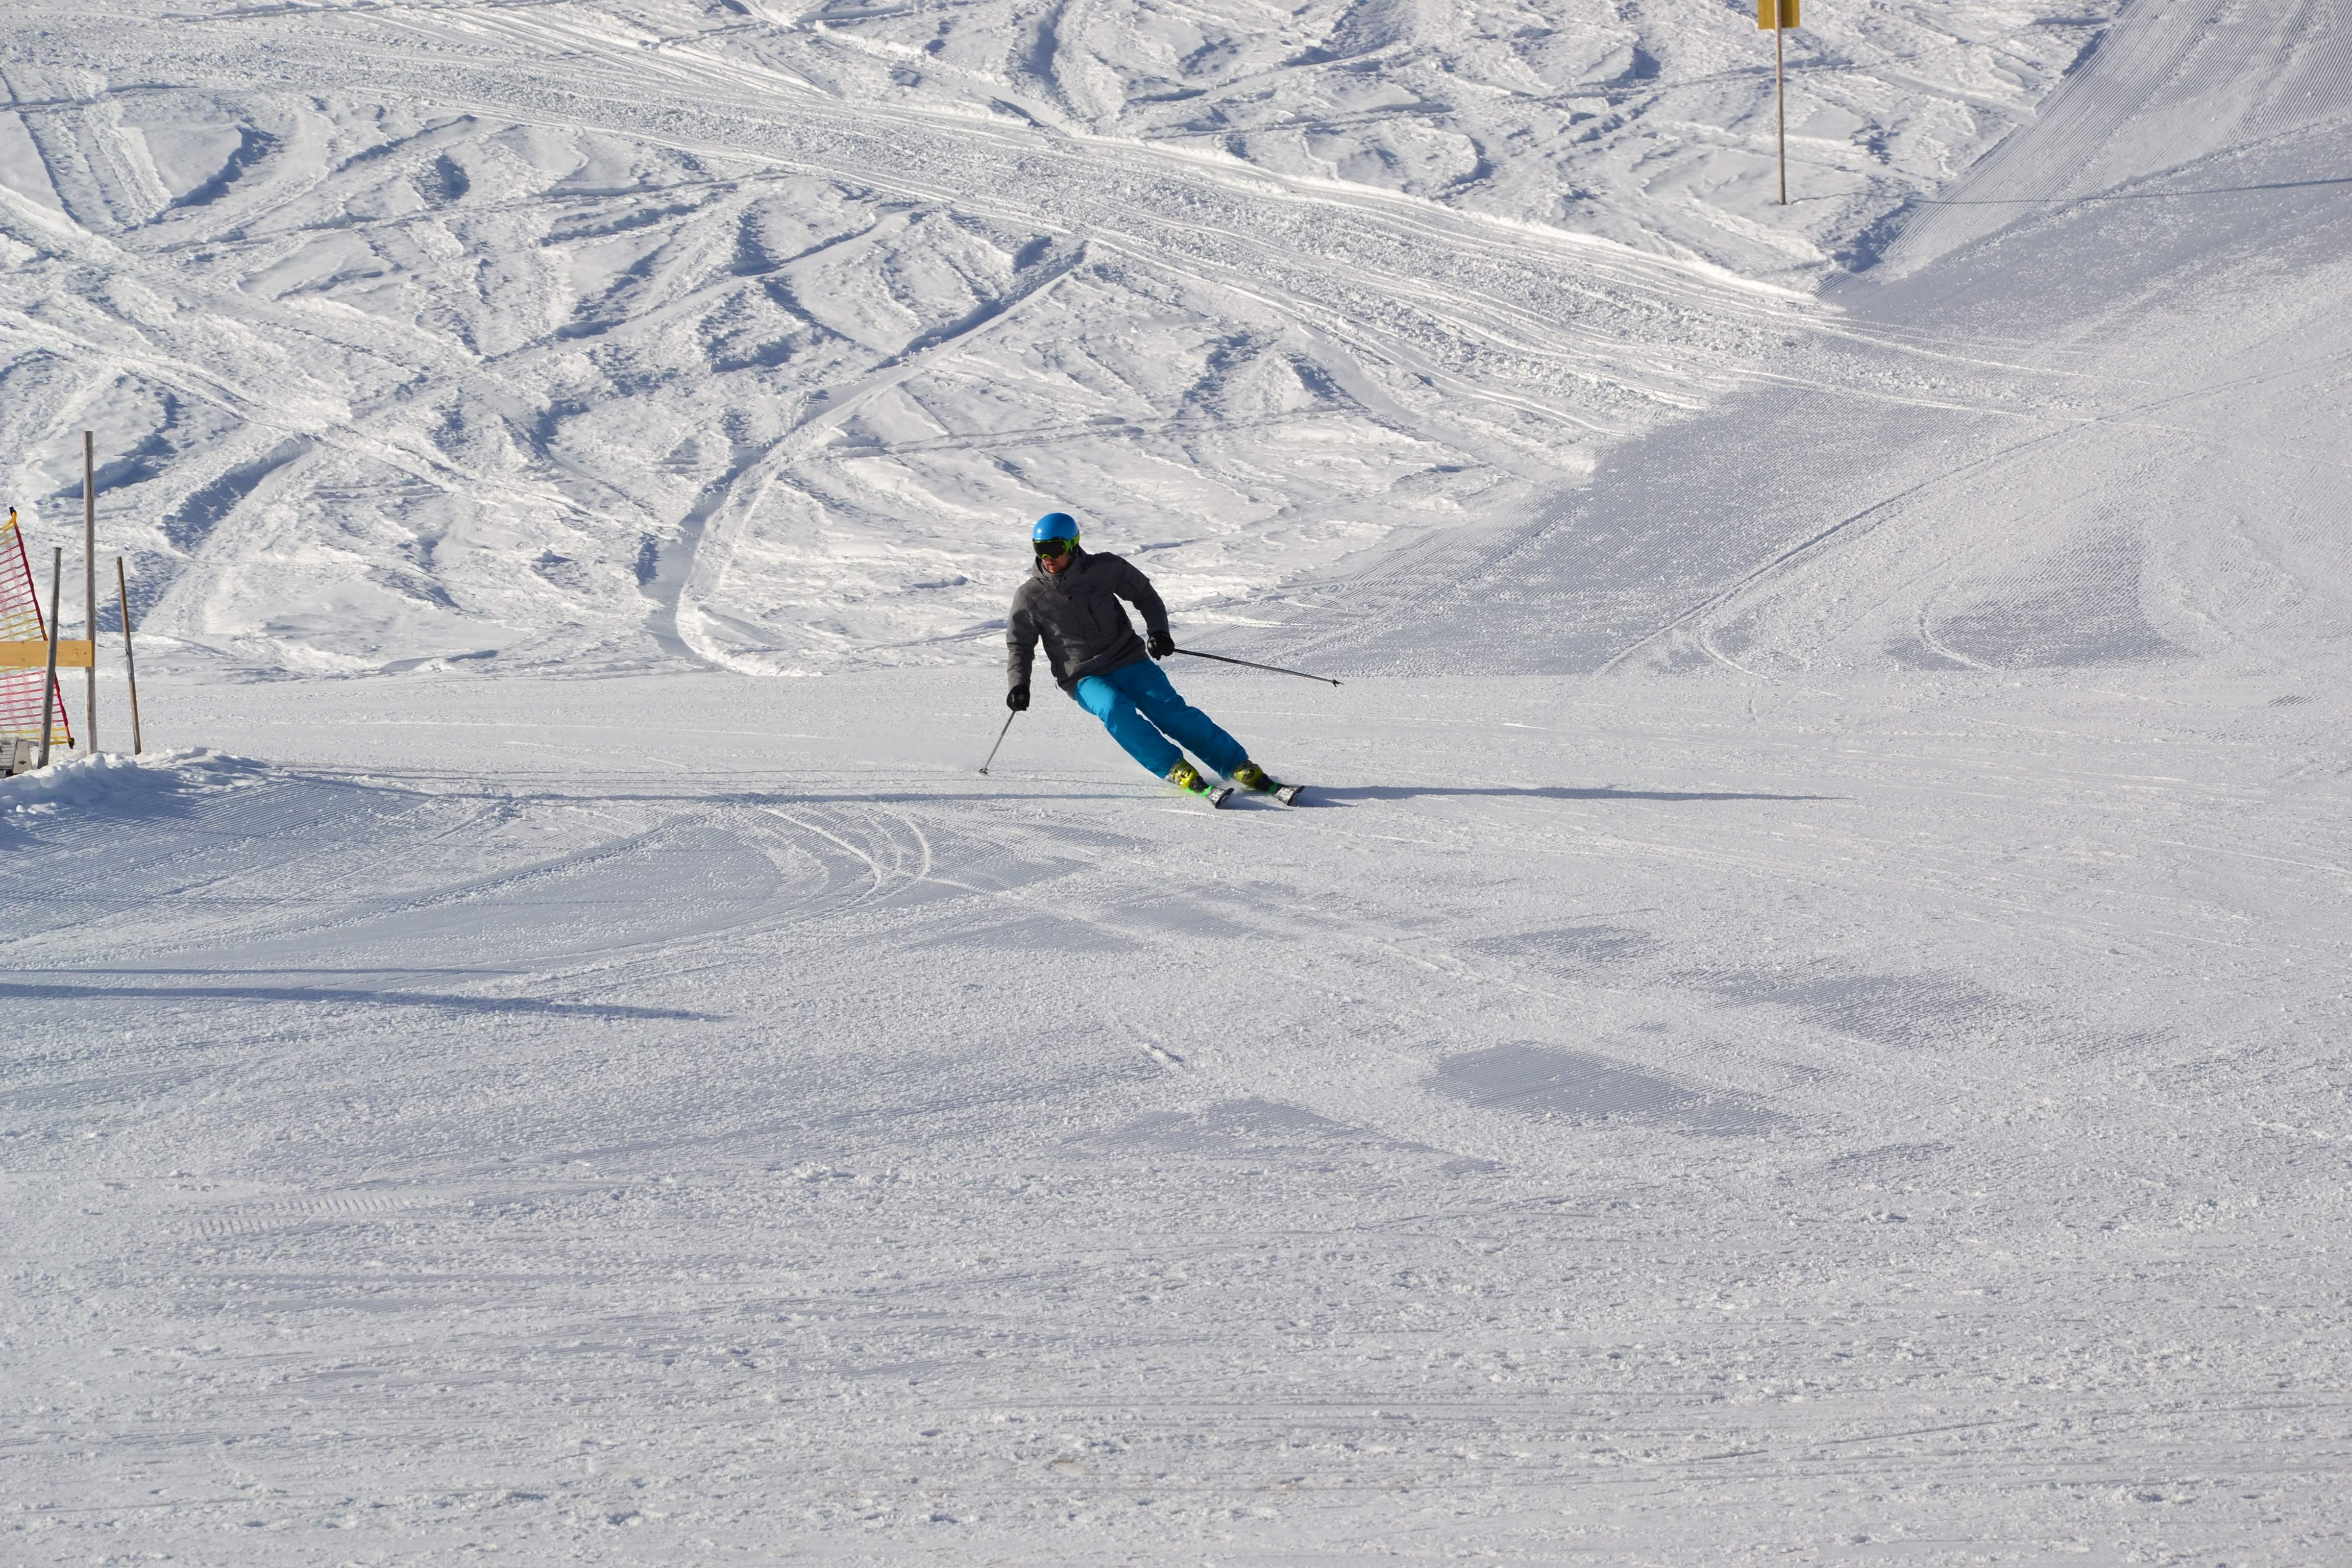 7. Skiing